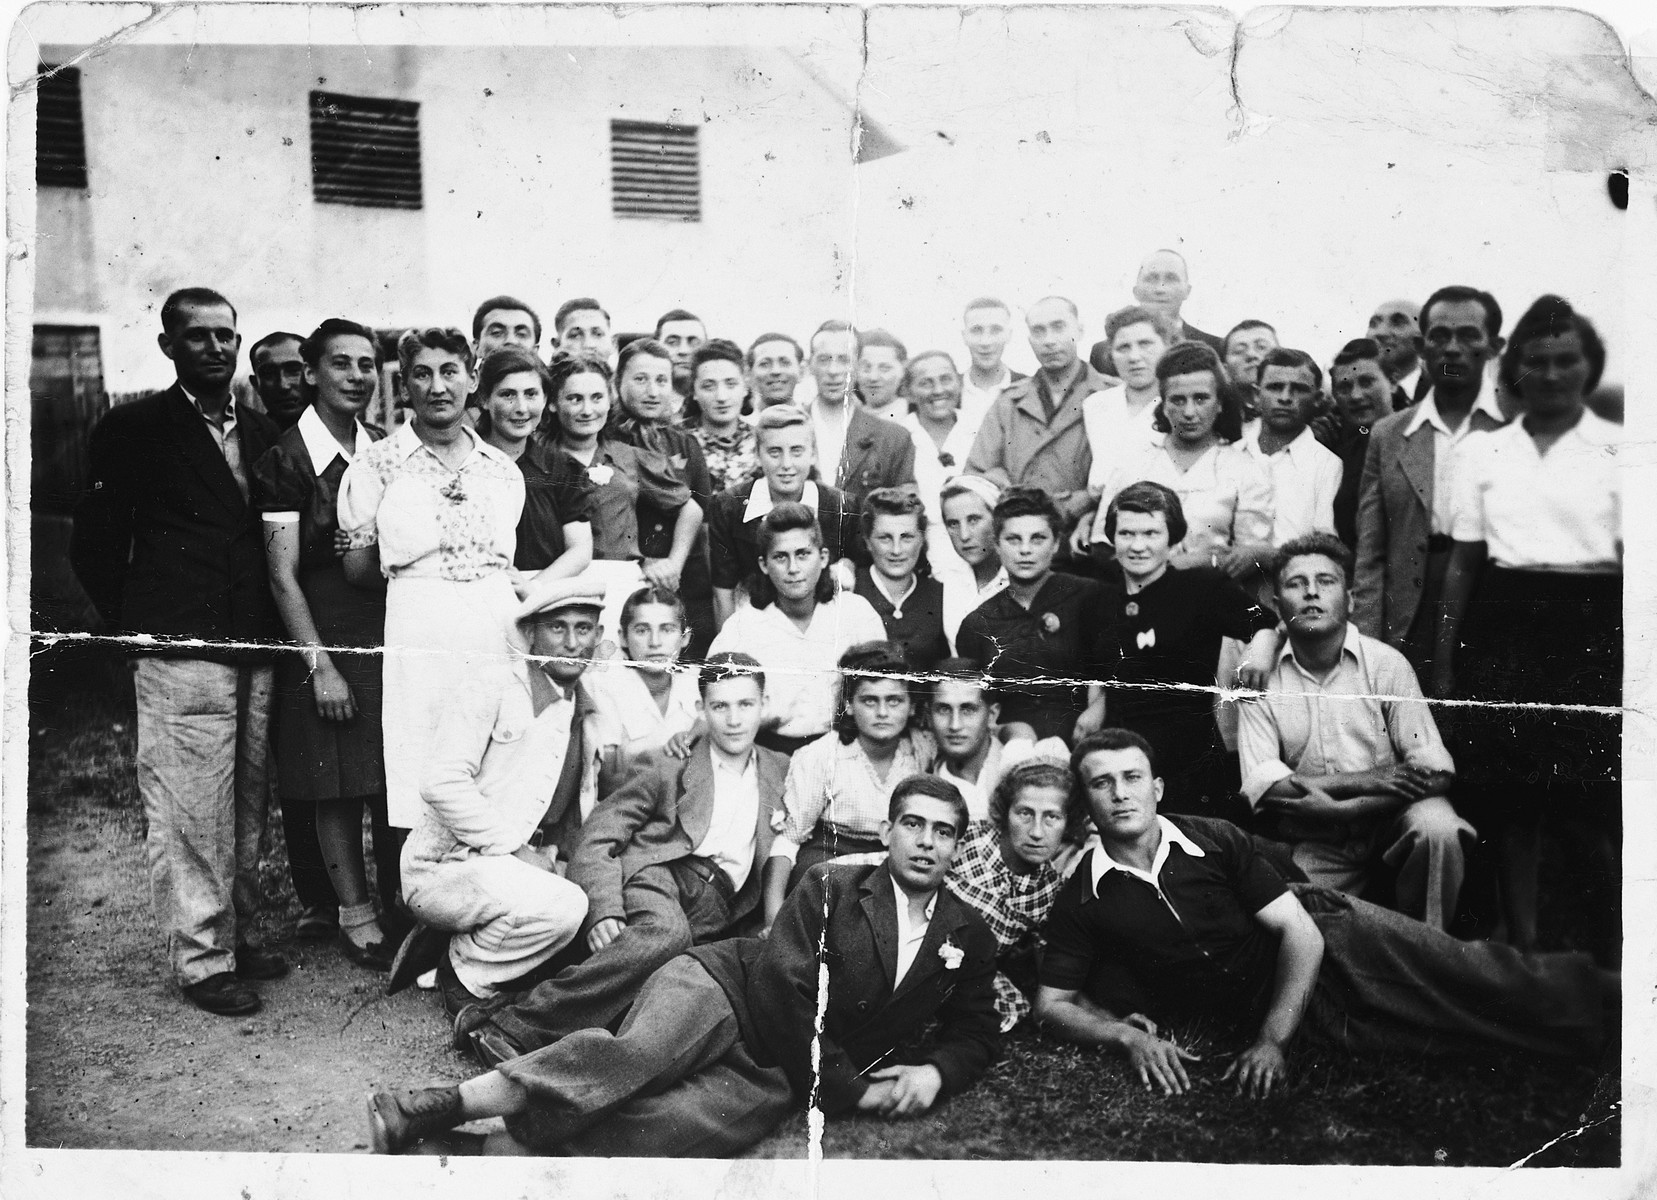 Group portrait of Jewish survivors who were liberated near Landsberg, Germany.